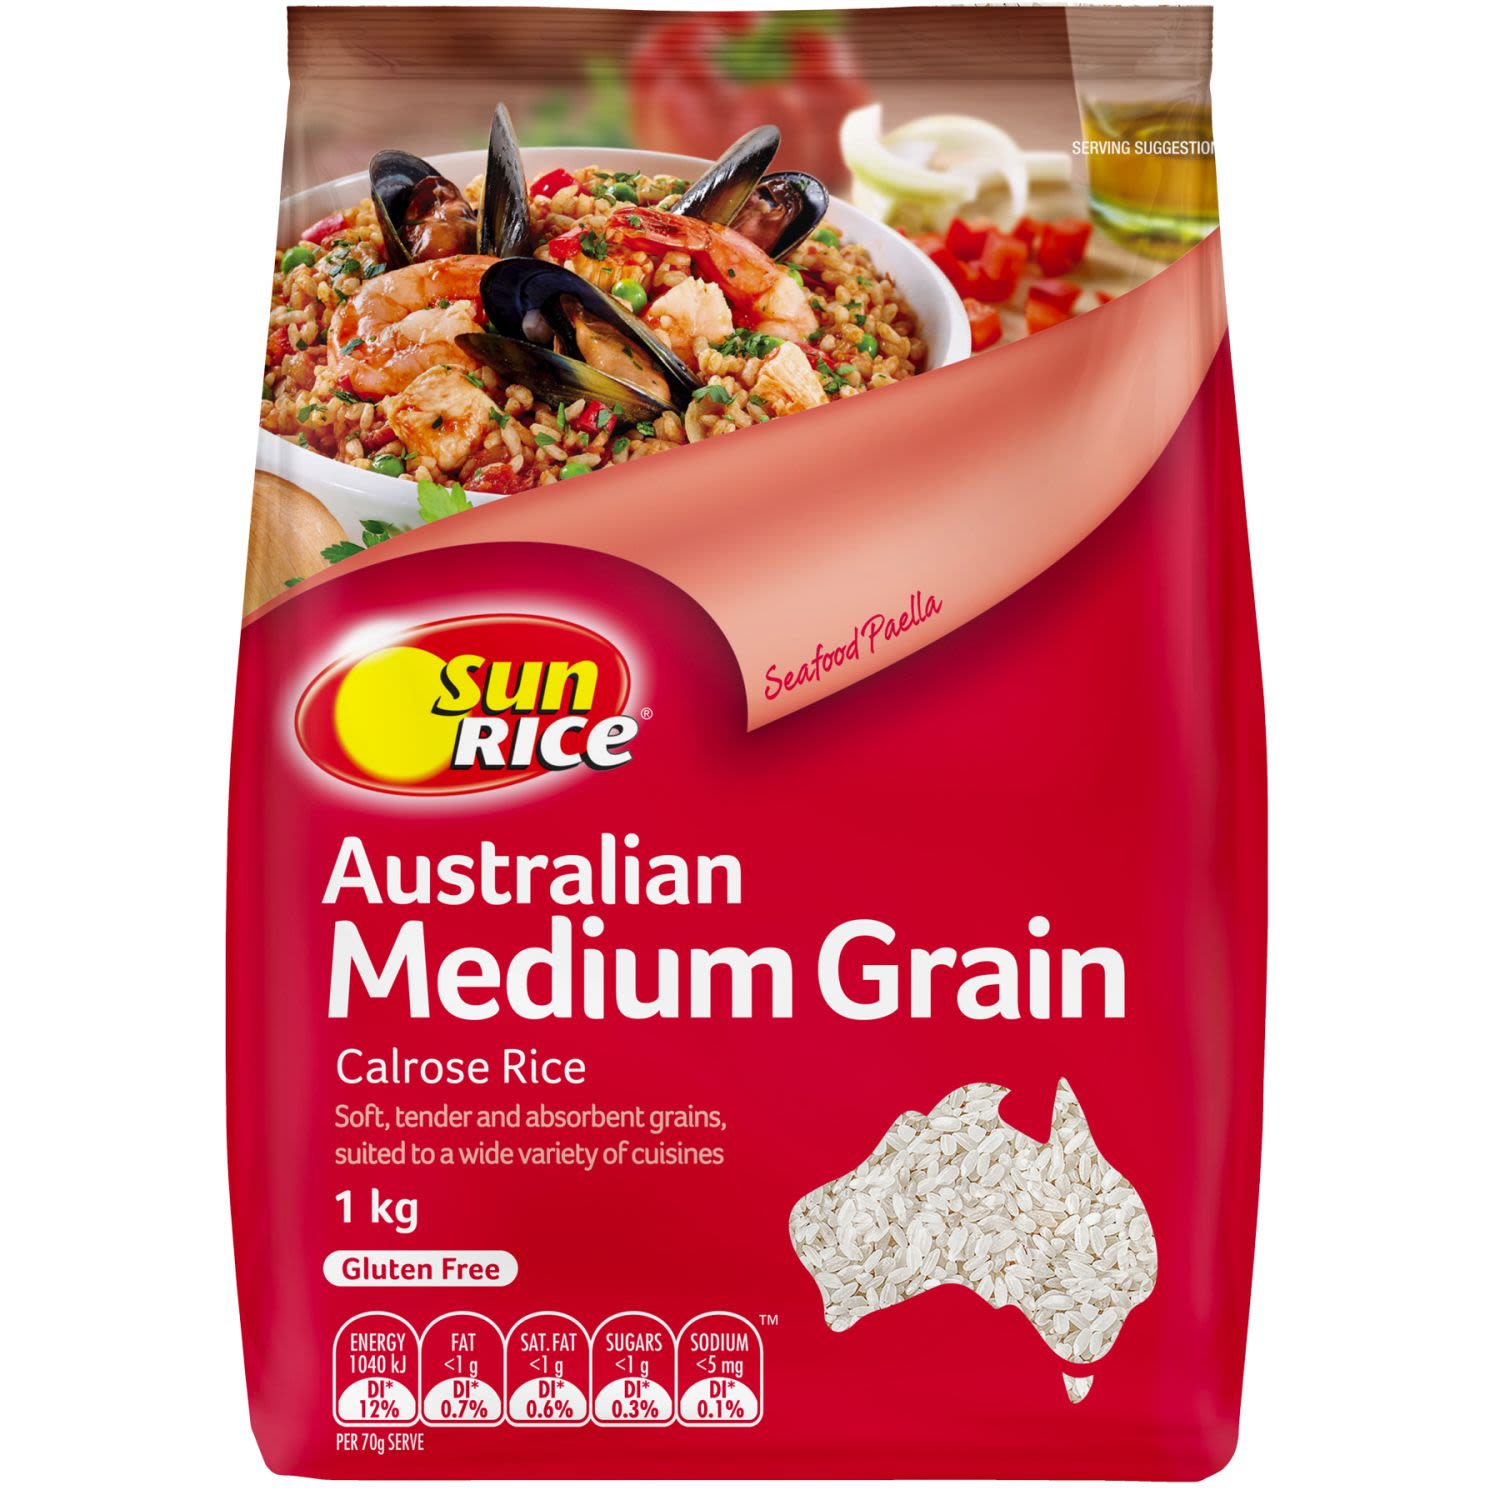 SunRice Australian Medium Grain Calrose Rice, 1 Kilogram